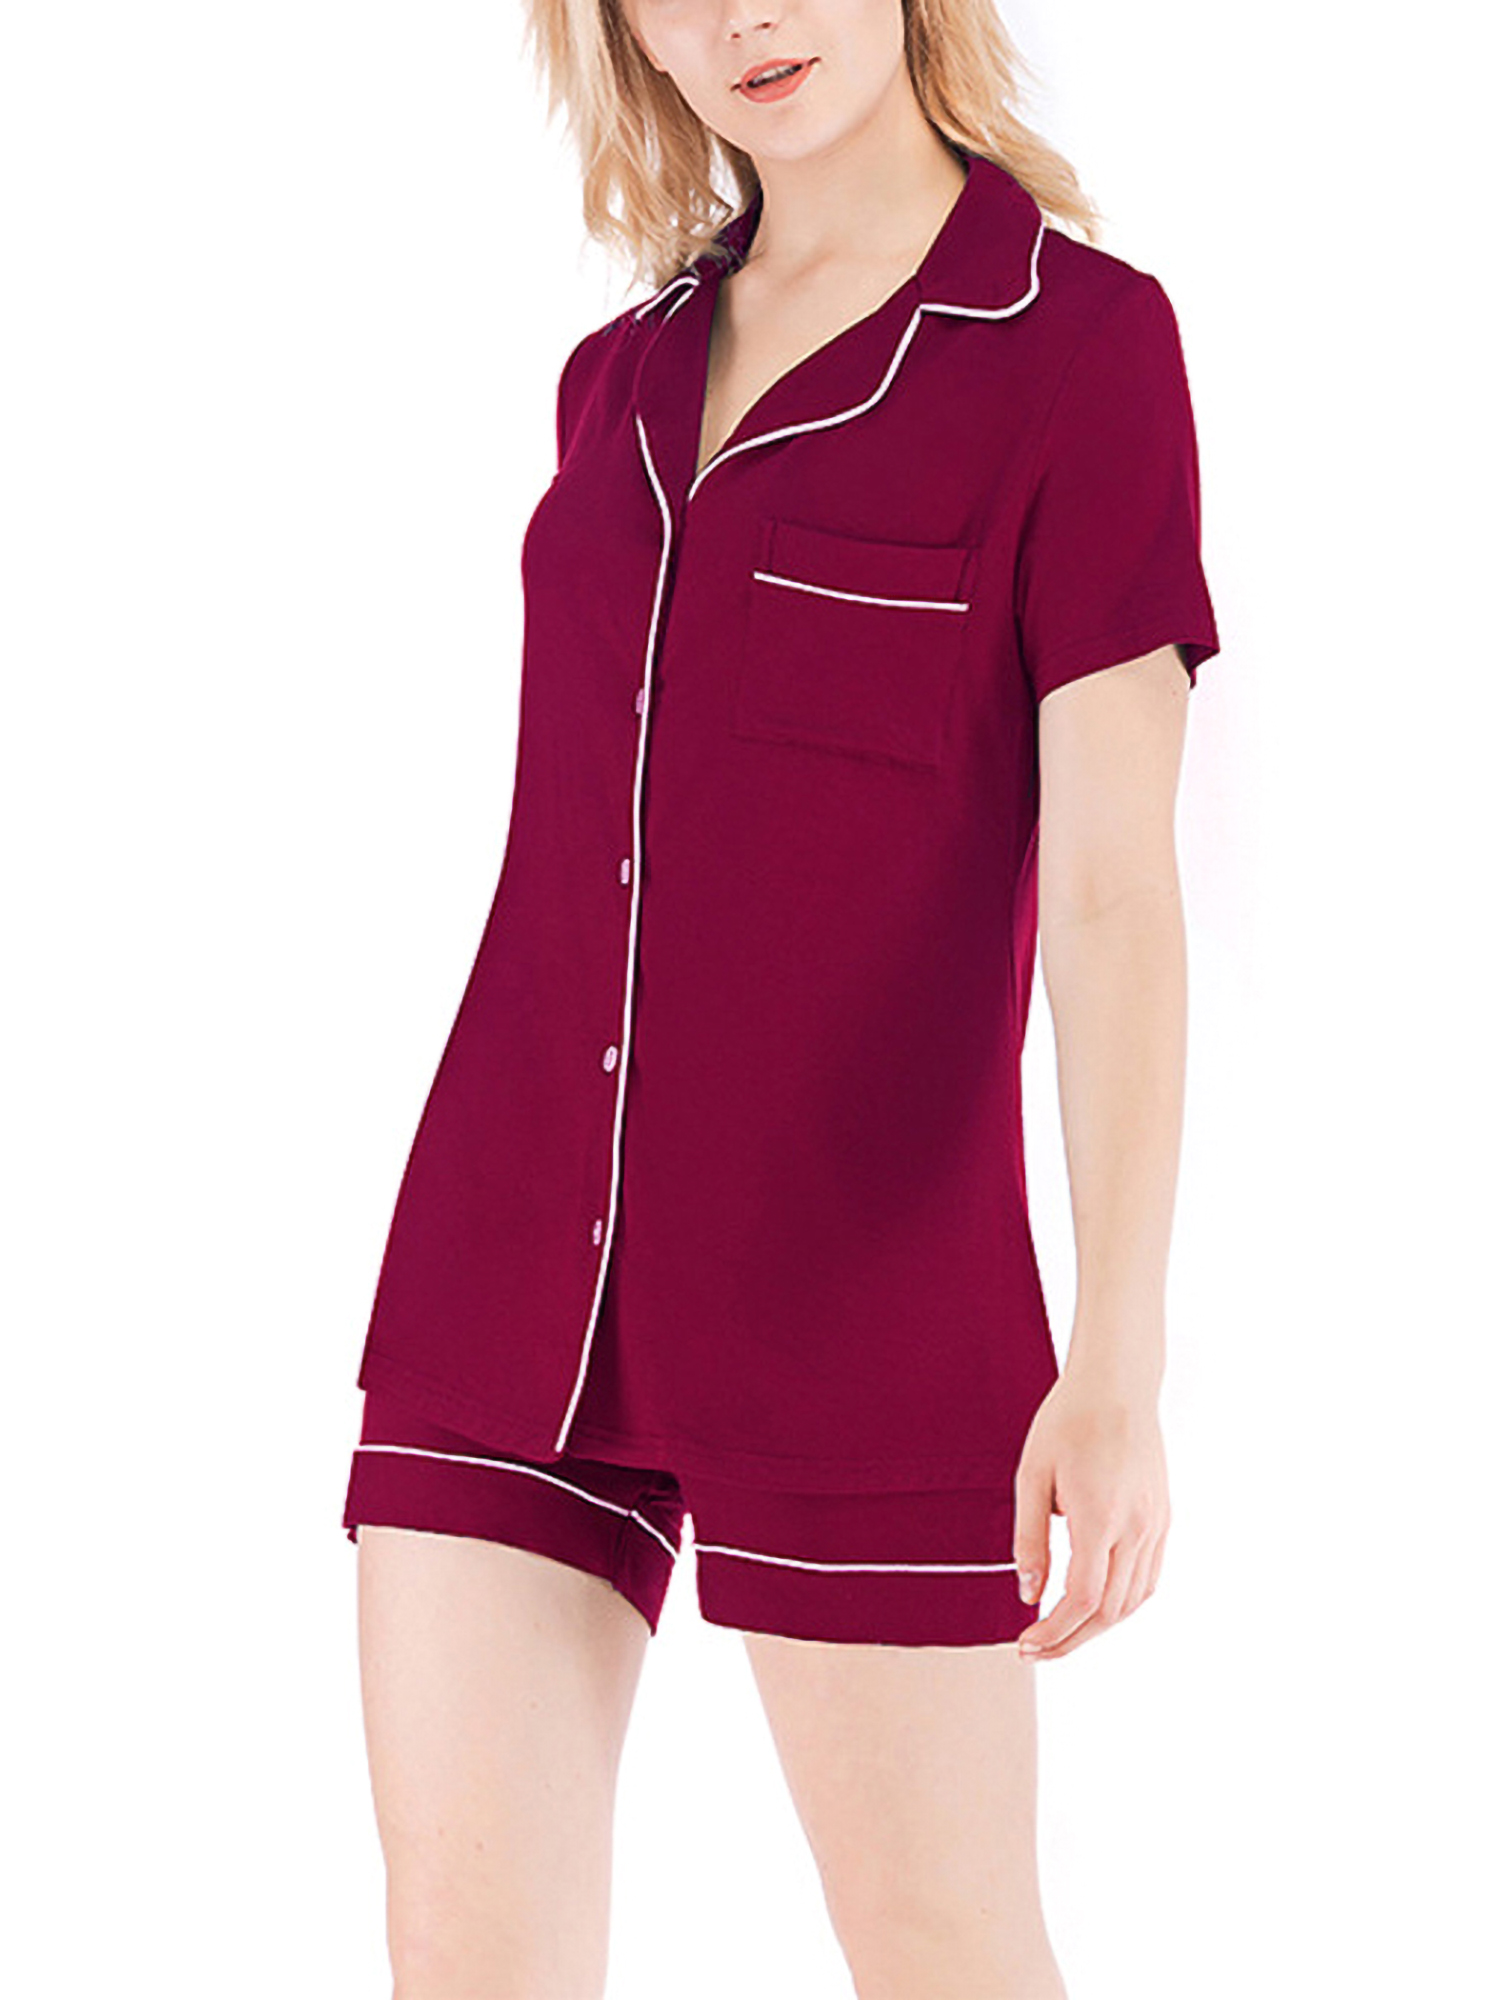 Womens Pyjama Sets Short Sleeve Summer Tops and Shorts Sleepwear Loungewear Pjs Set